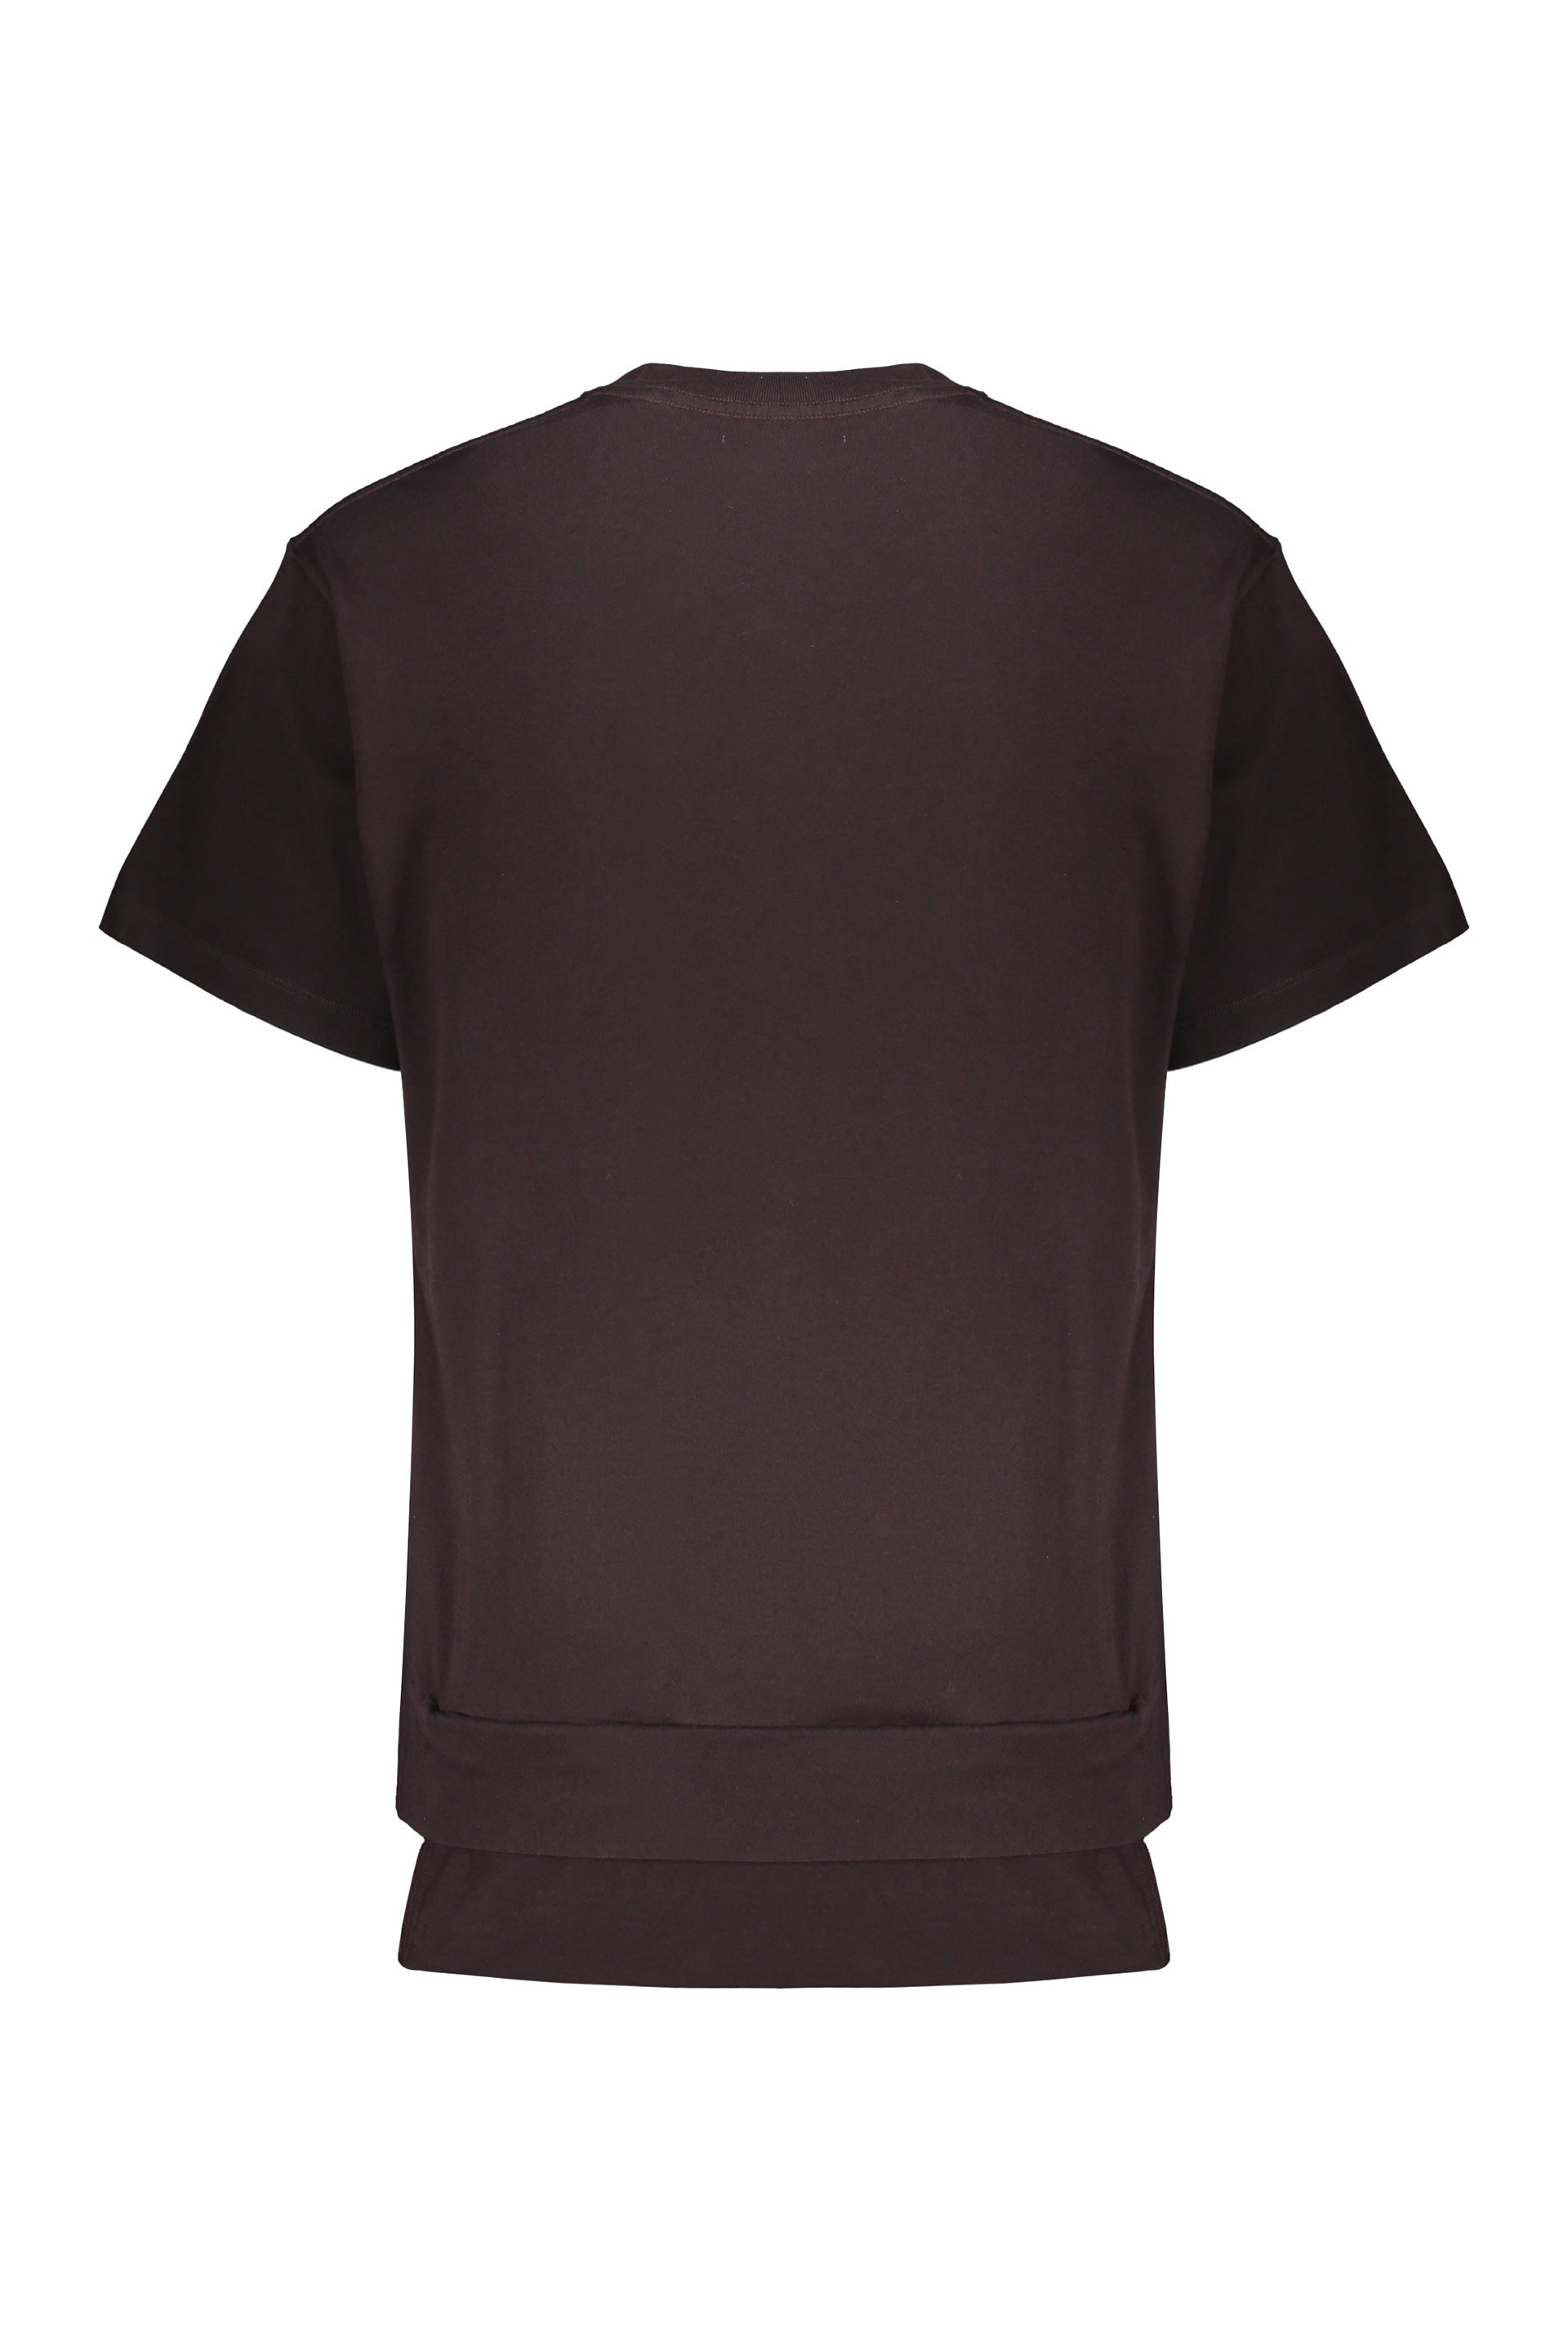 AMBUSH-OUTLET-SALE-Cotton-T-shirt-Shirts-ARCHIVE-COLLECTION-2_fc5b771e-41aa-405f-ad99-ac34170d46b7.jpg